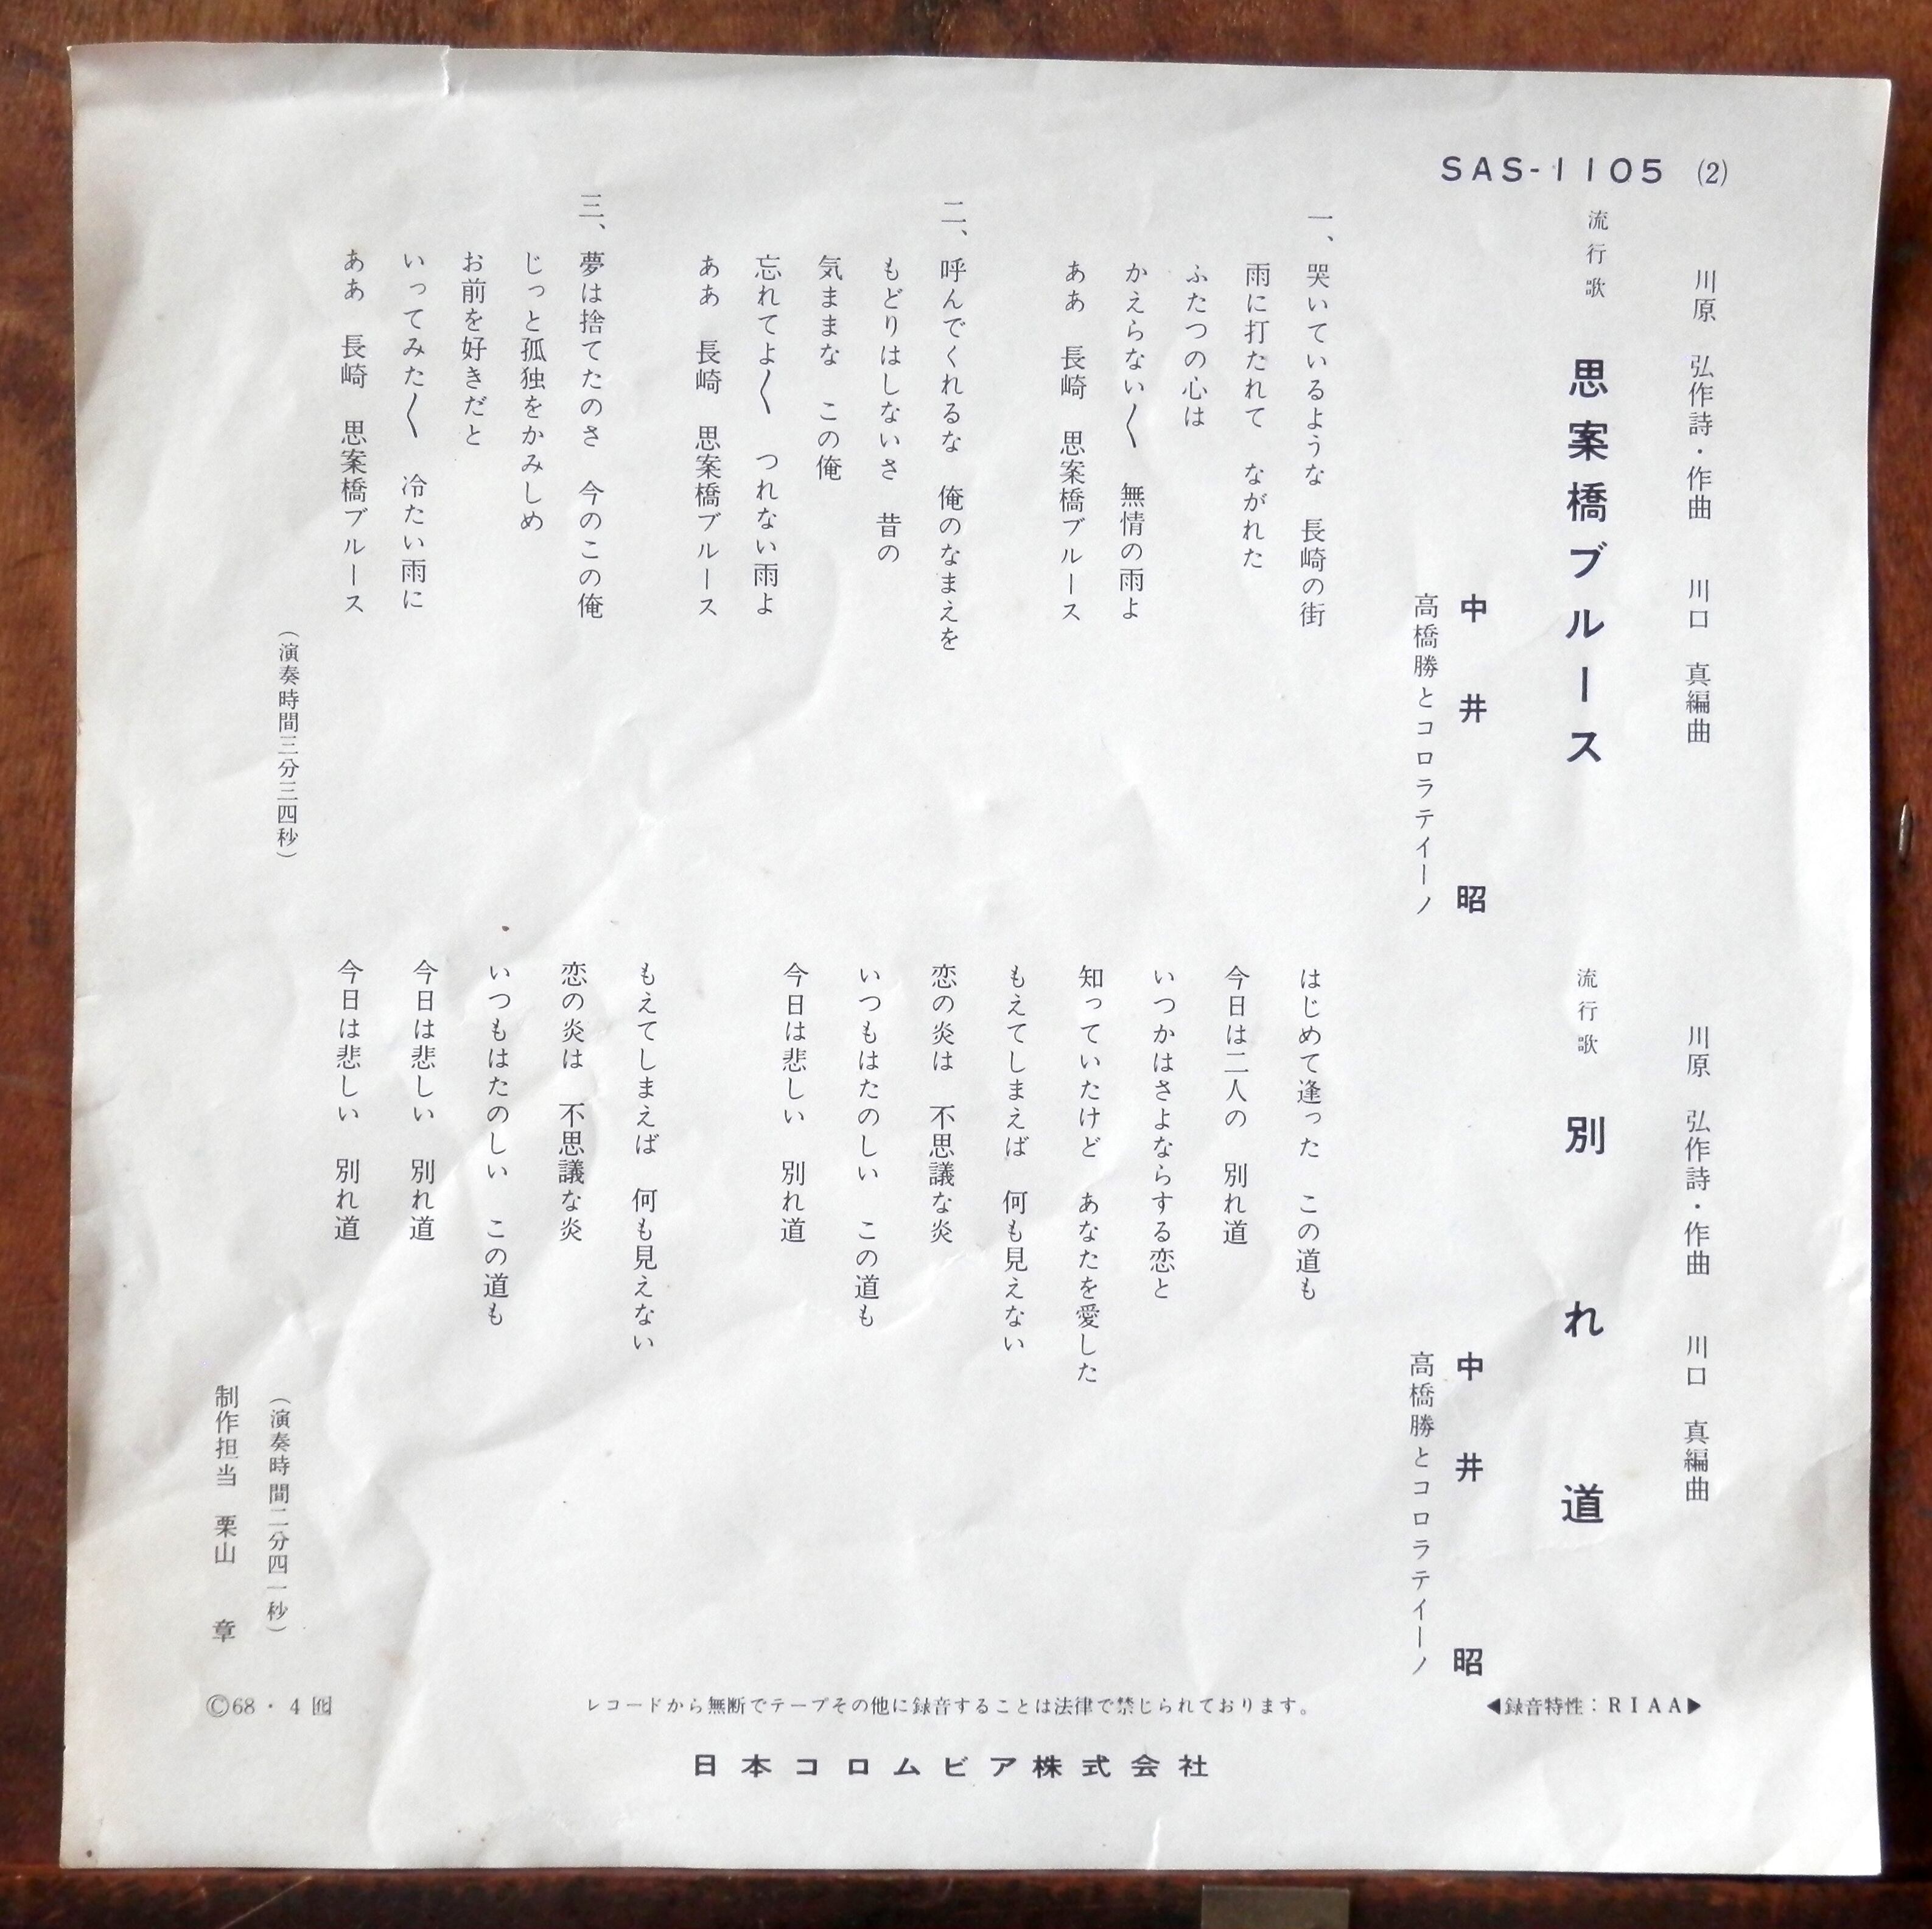 68【EP】中井昭/高橋勝とコロラティーノ - 思案橋ブルース | 音盤窟